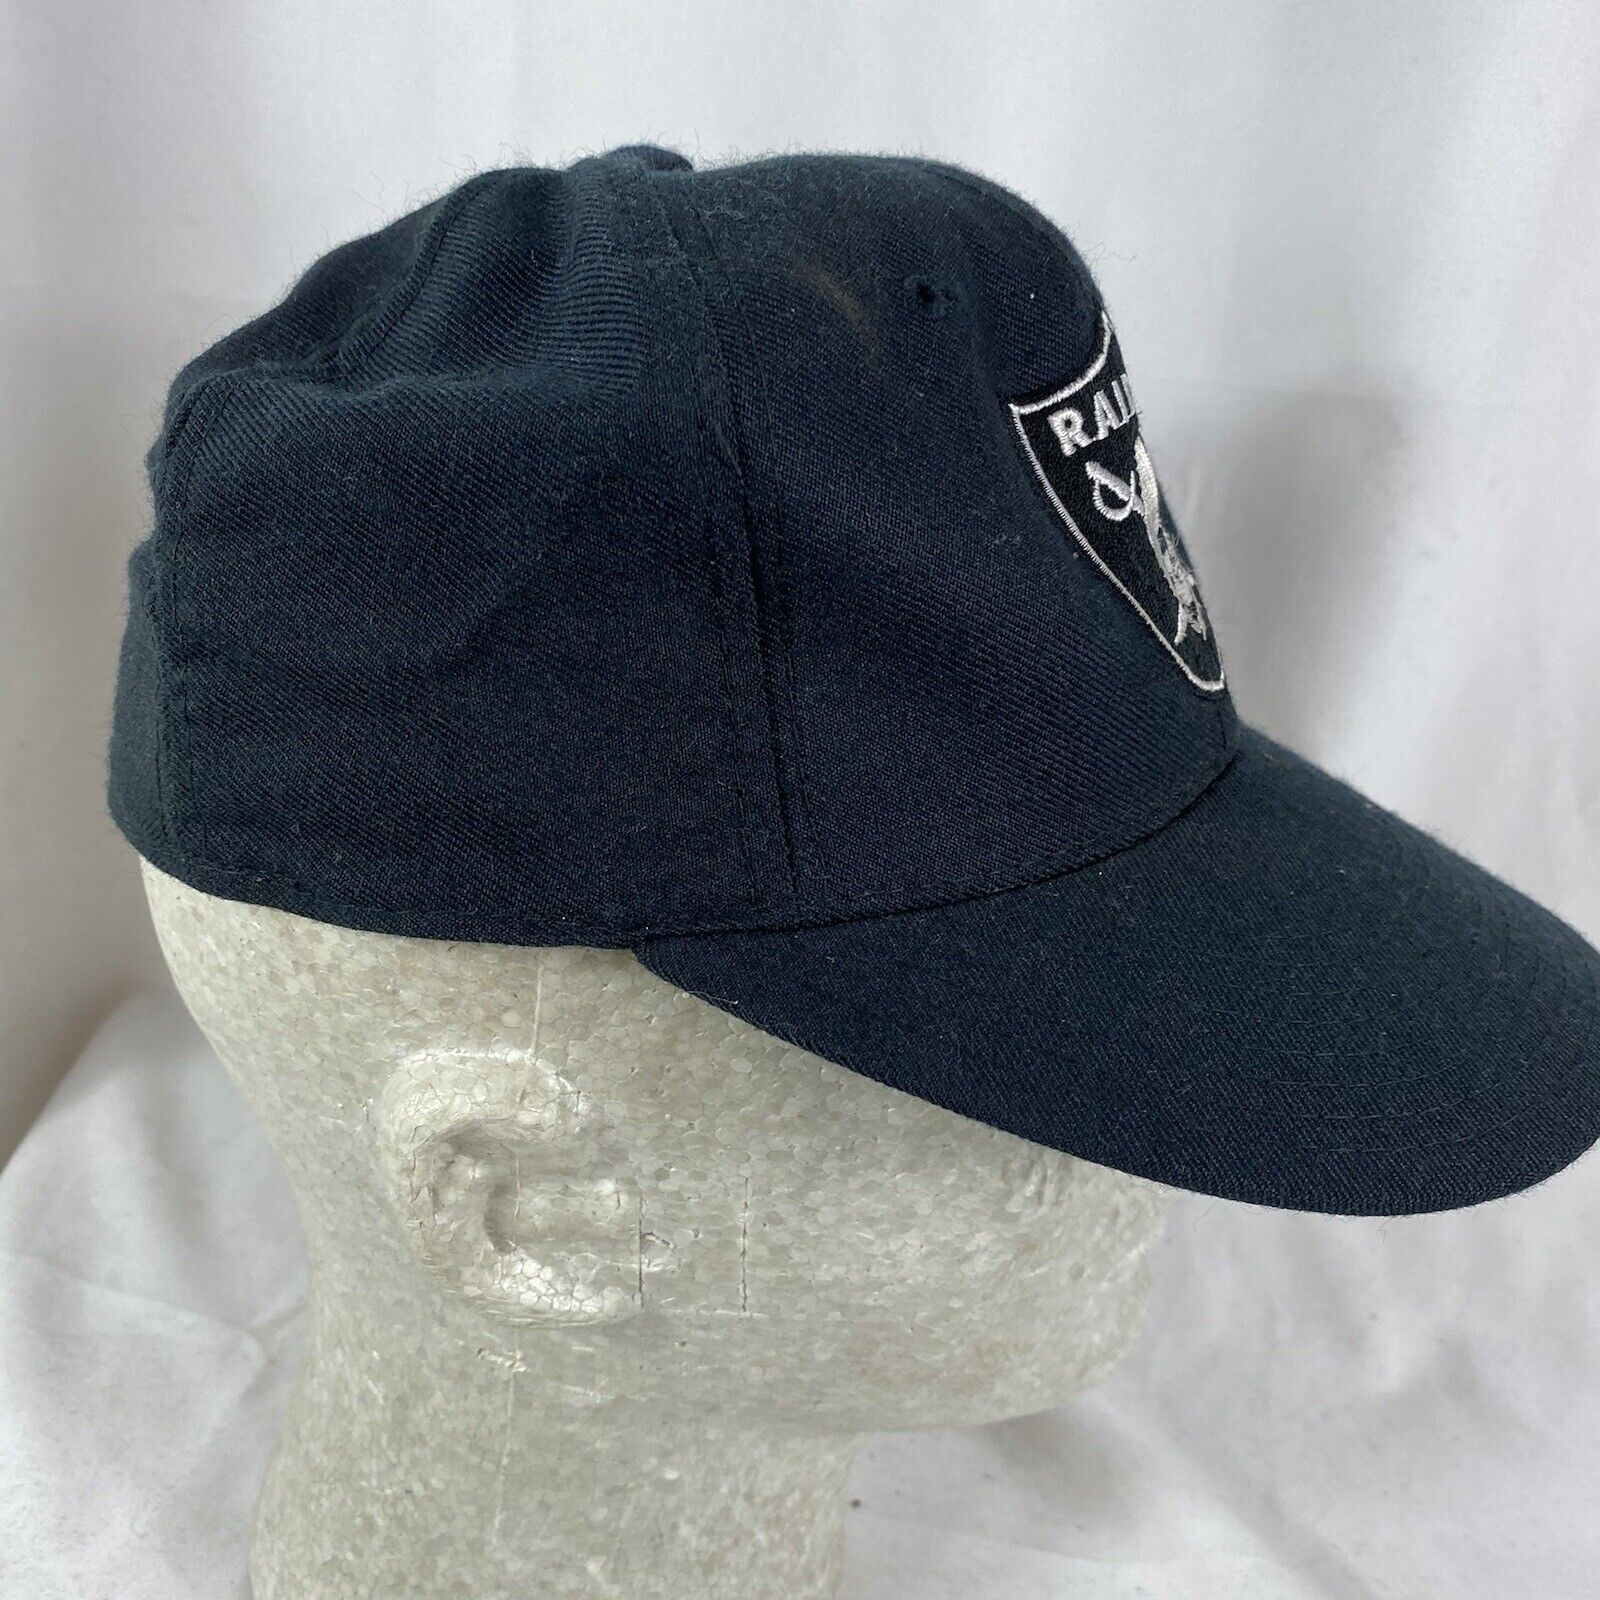 Vintage 1980s New Era Los Angeles Raiders Fixed Cap Hat 6 7/8 | eBay